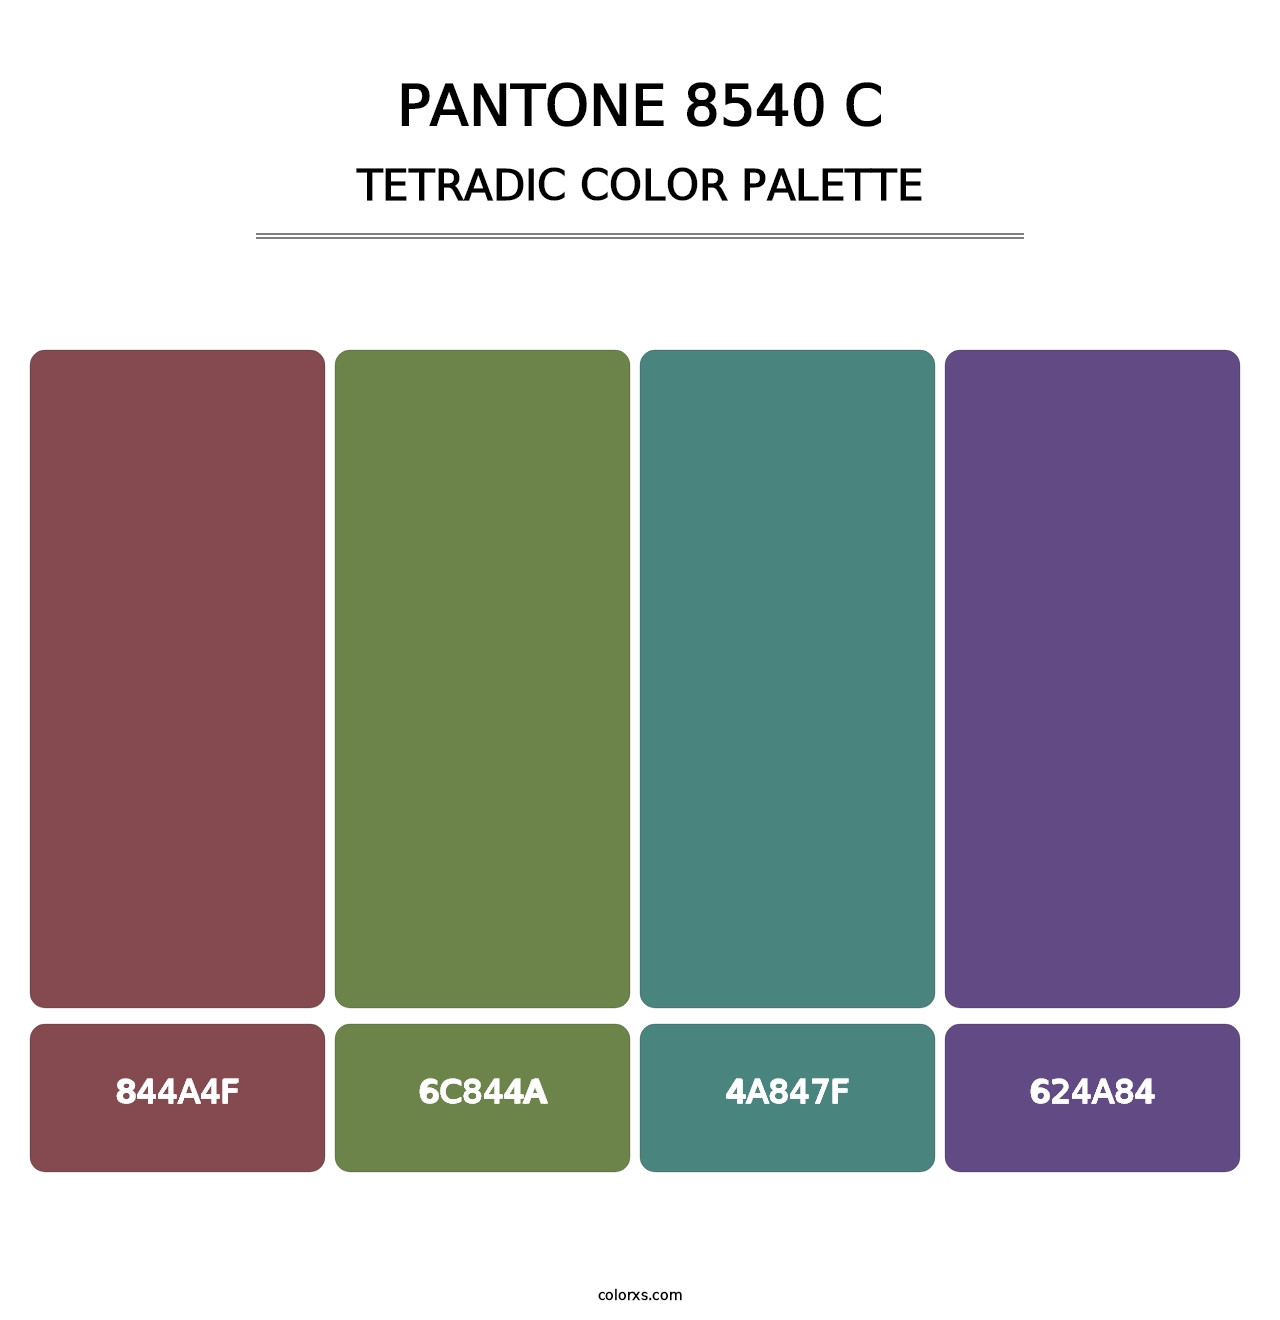 PANTONE 8540 C - Tetradic Color Palette